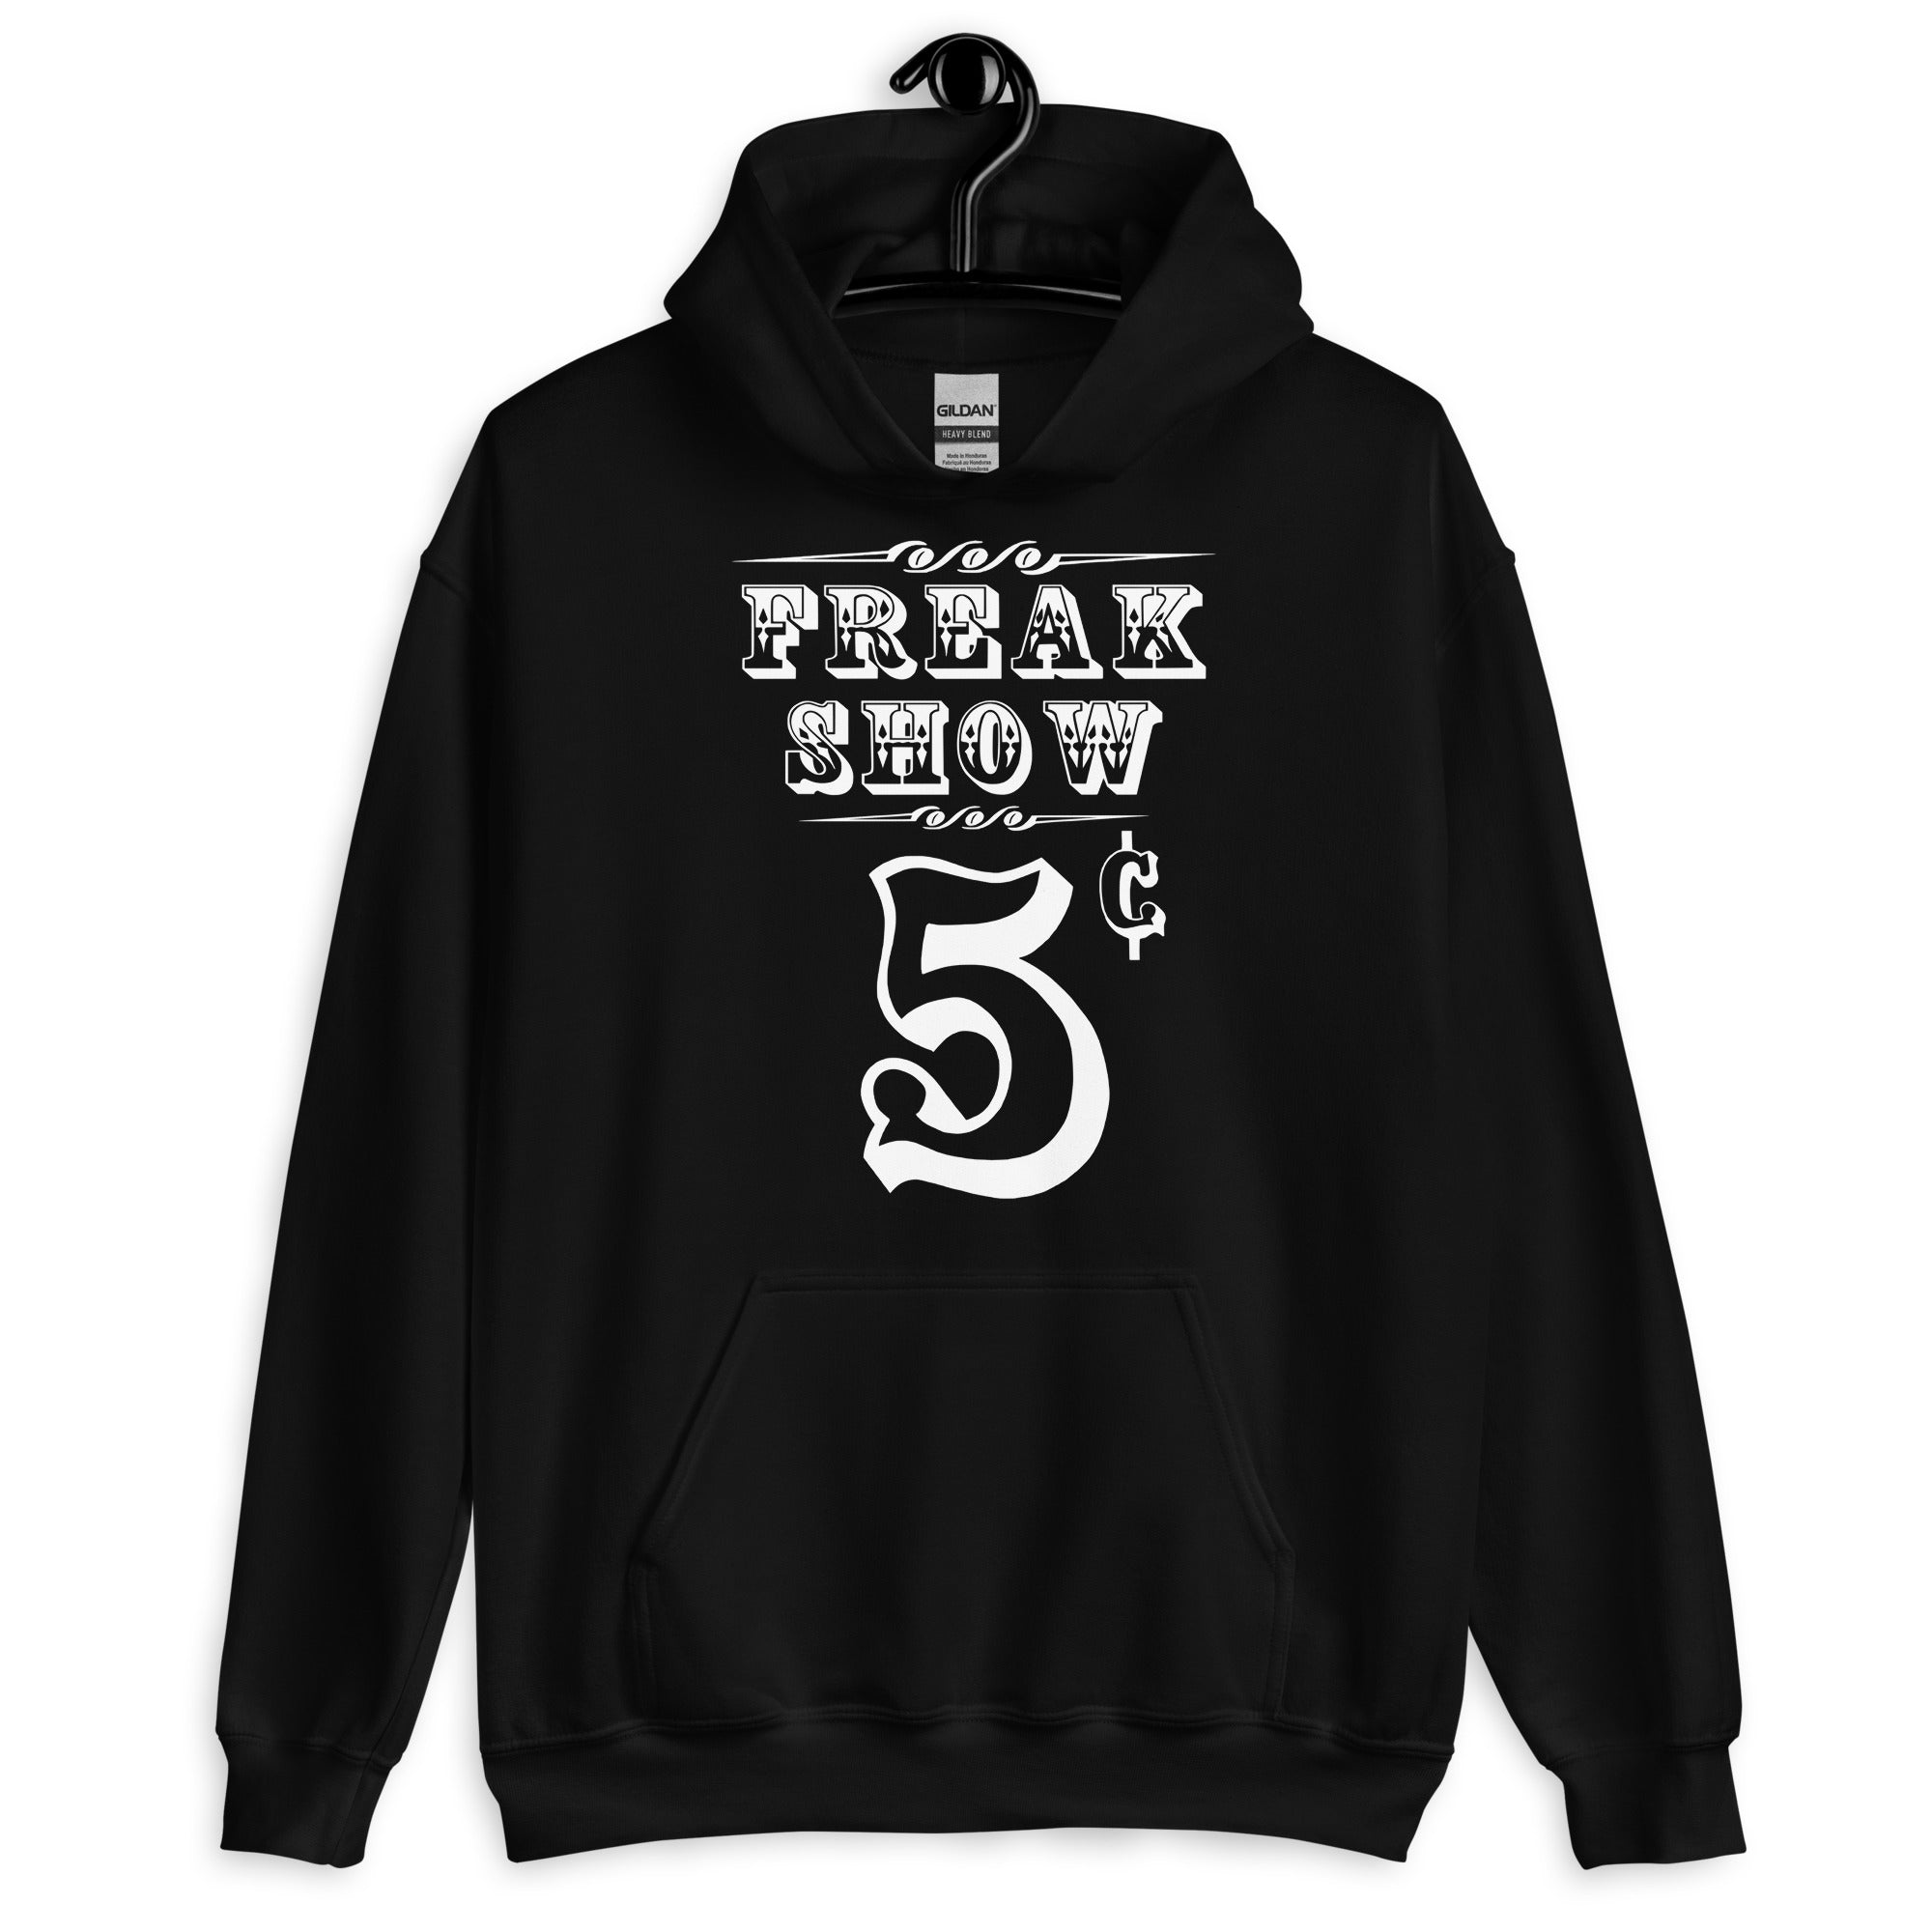 Carnival Freak Show 5 Cents Unisex Hoodie Sweatshirt - Edge of Life Designs